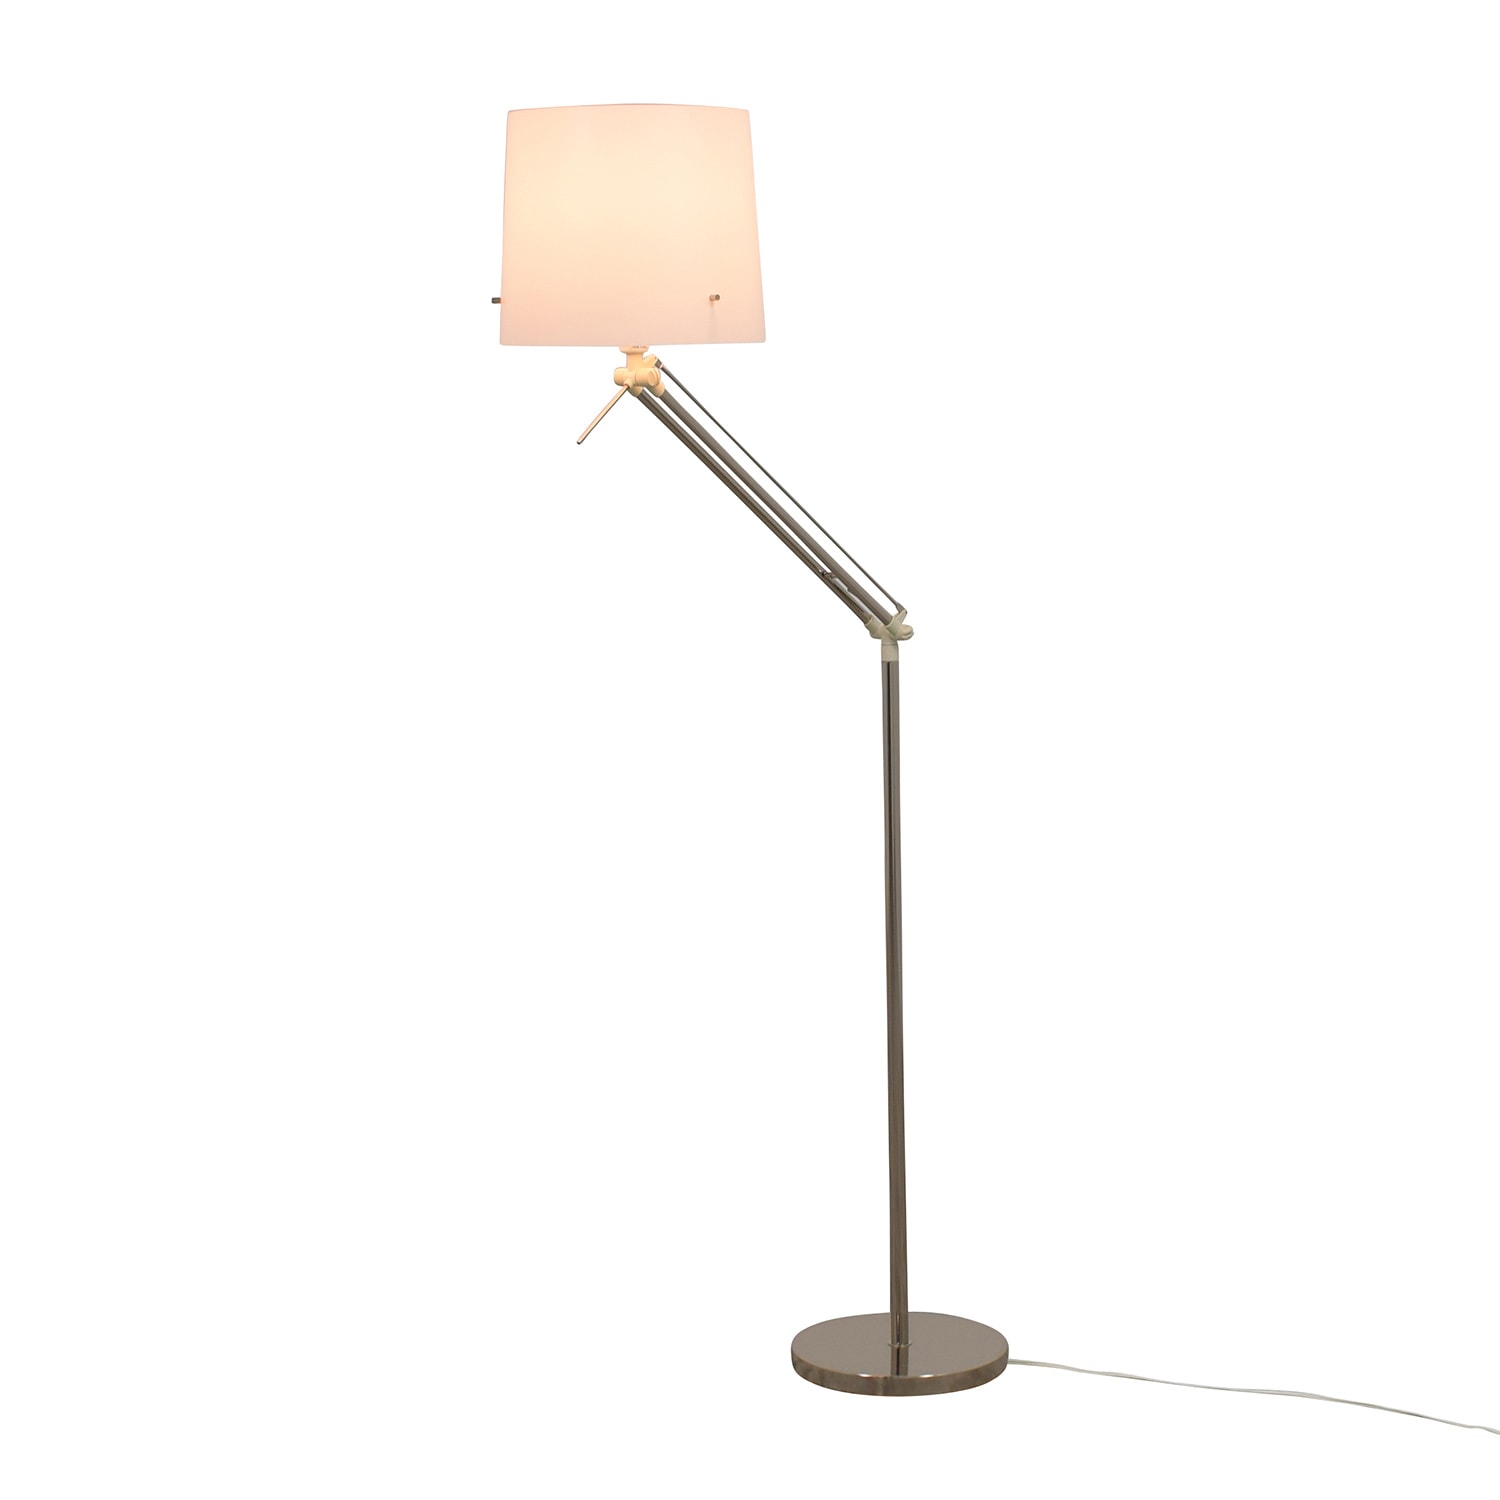 35% OFF - IKEA IKEA Adjustable Angle Floor Lamp / Decor